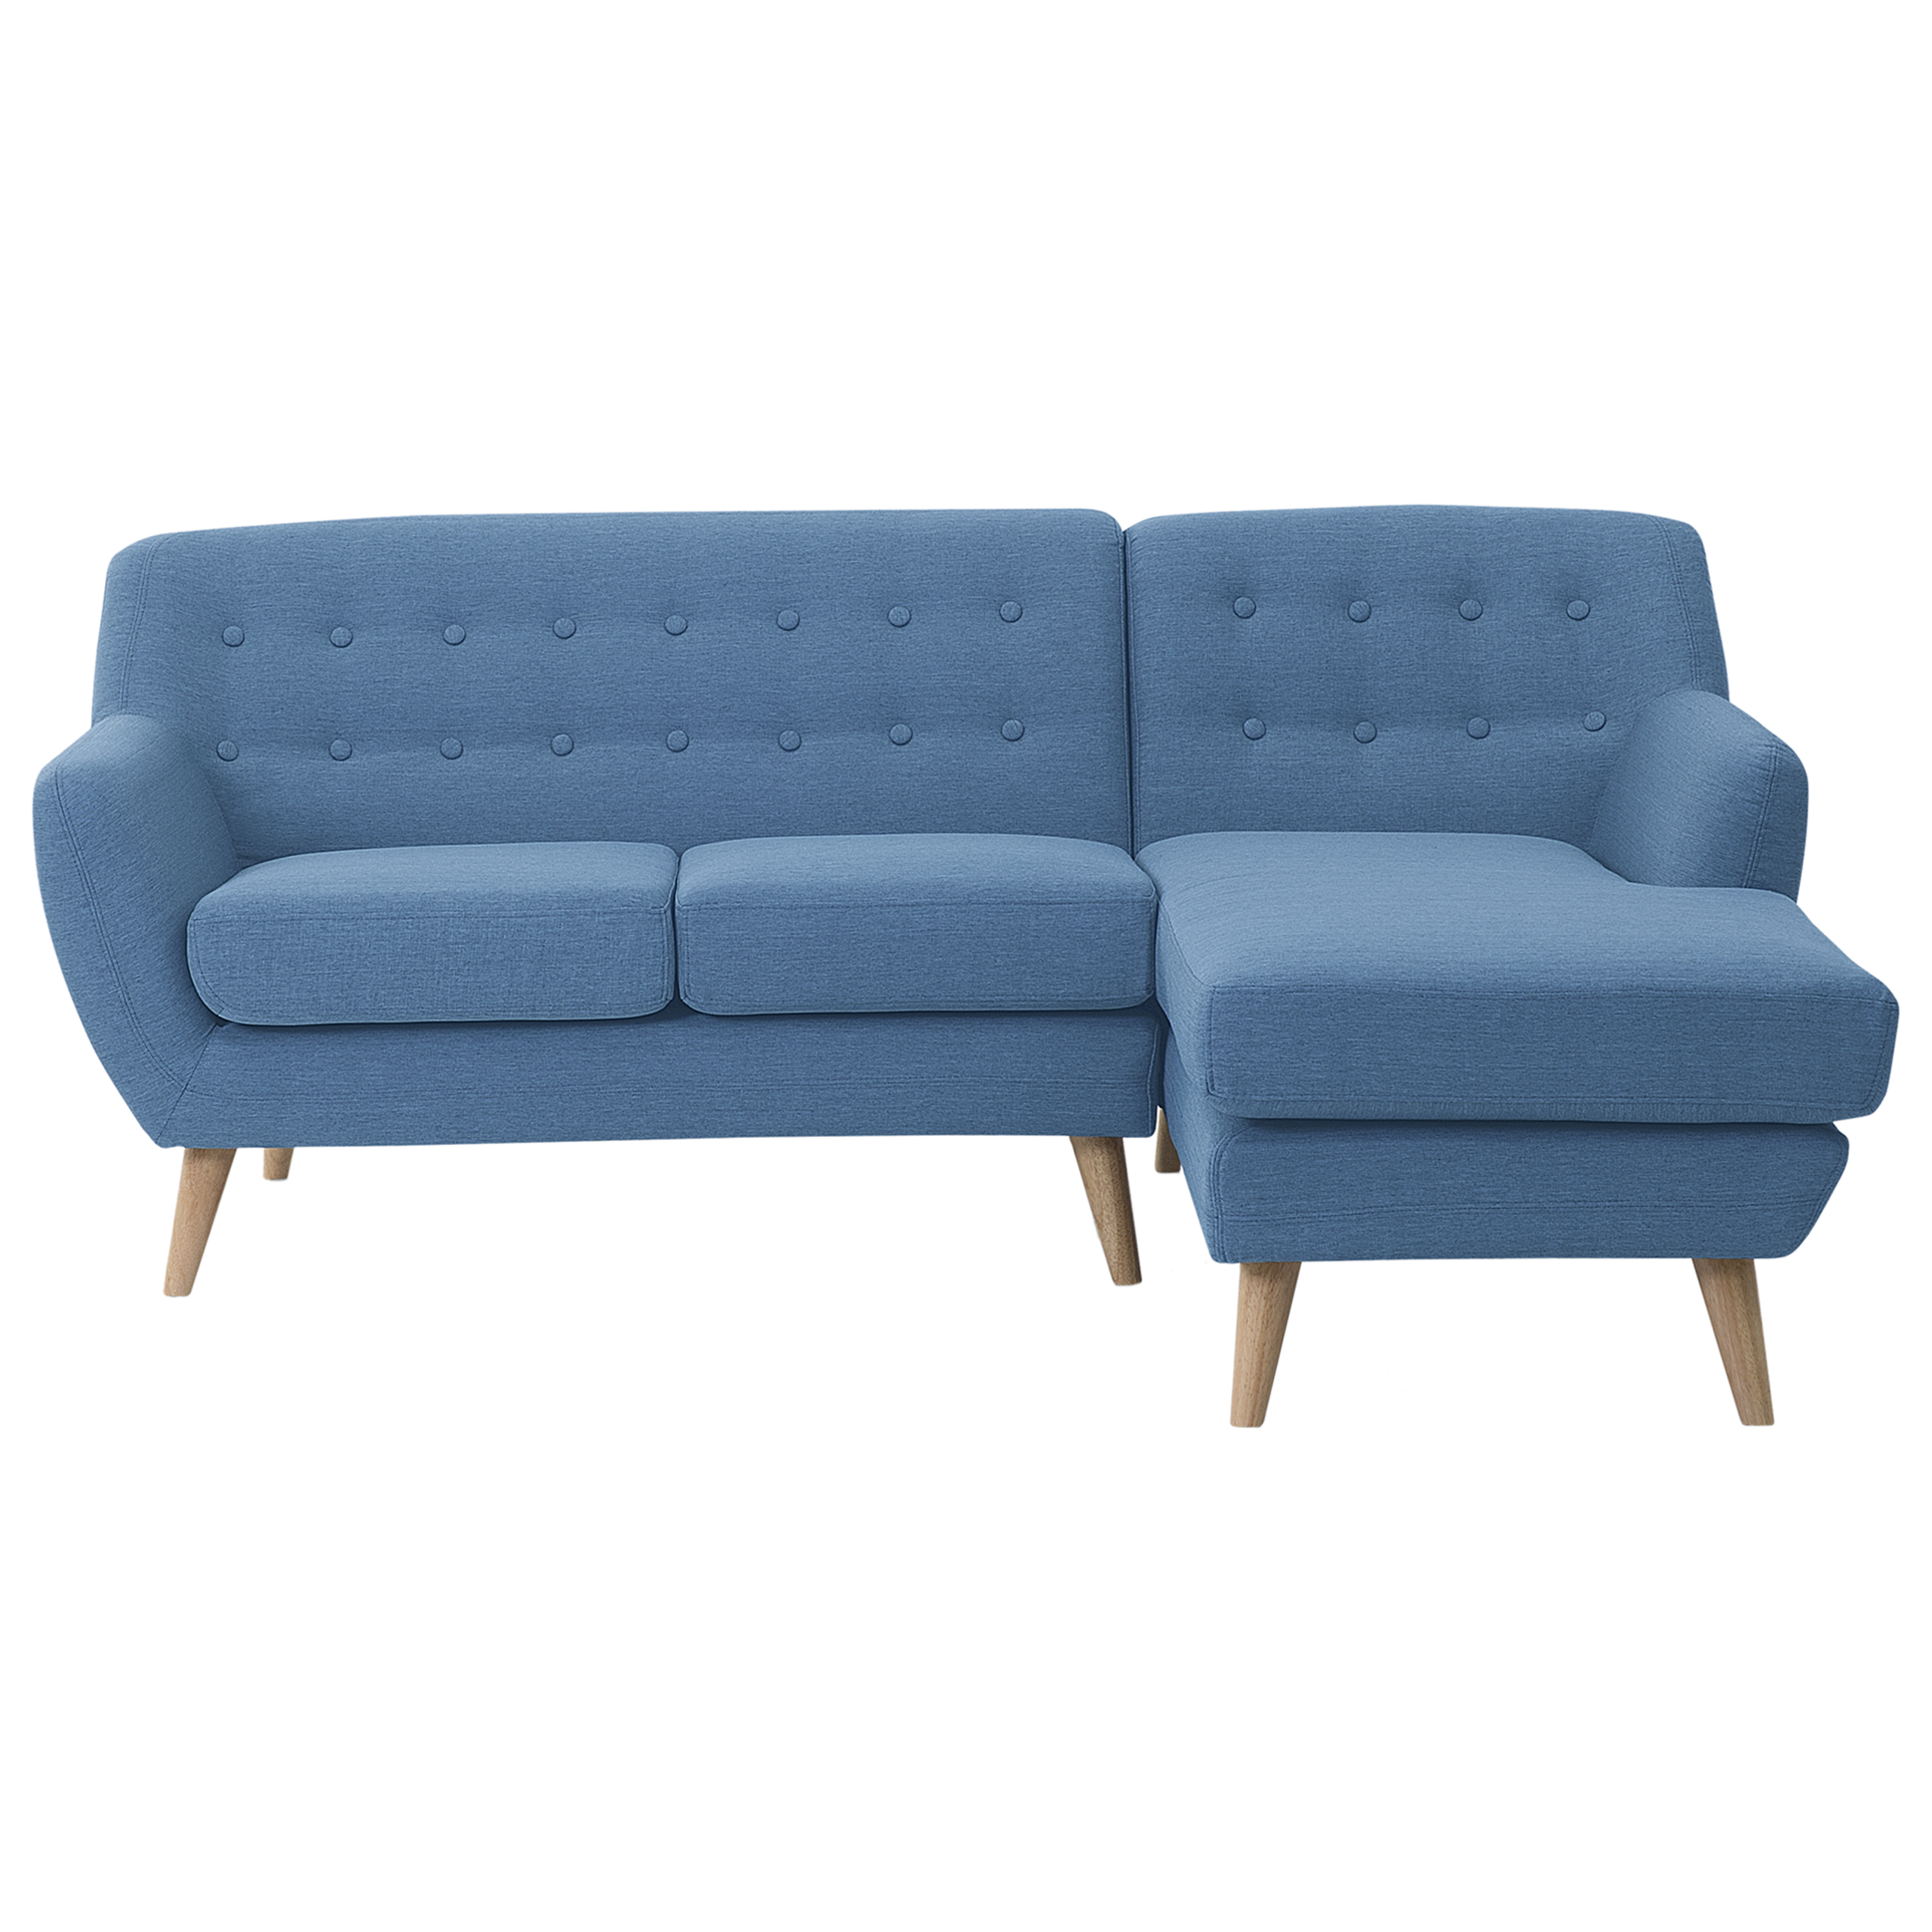 Beliani Corner Sofa Blue Upholstered Tufted Back Thickly Padded Chaise Longue Light Wood Legs Scandinavian Minimalist Living Room